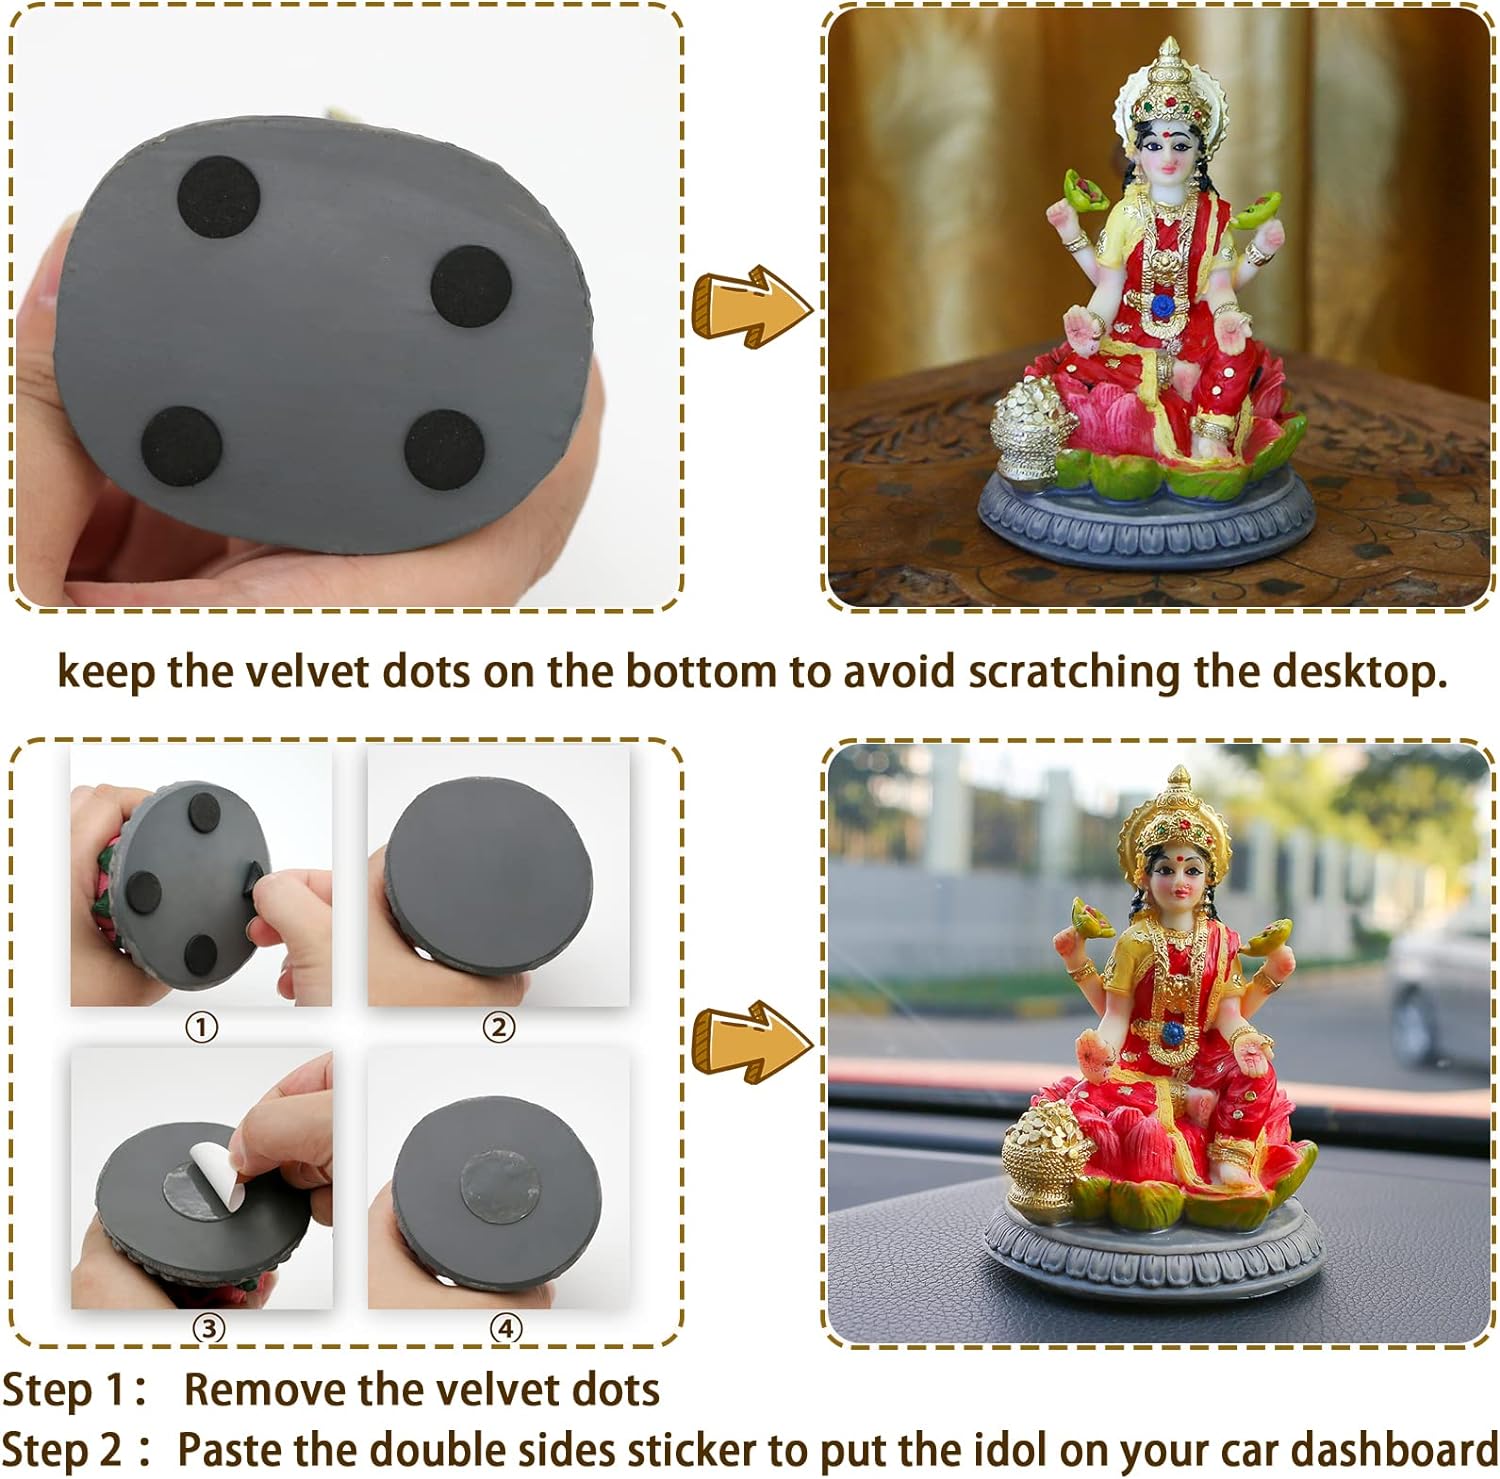 Small Hindu Goddess Lakshmi Statue - 3.9”H Indian Ido Laxmi Figurine for Car Dash Board Decor Home Office Mandir Temple Altar Shrine Pooja Item Murti for Diwali Puja Gifts